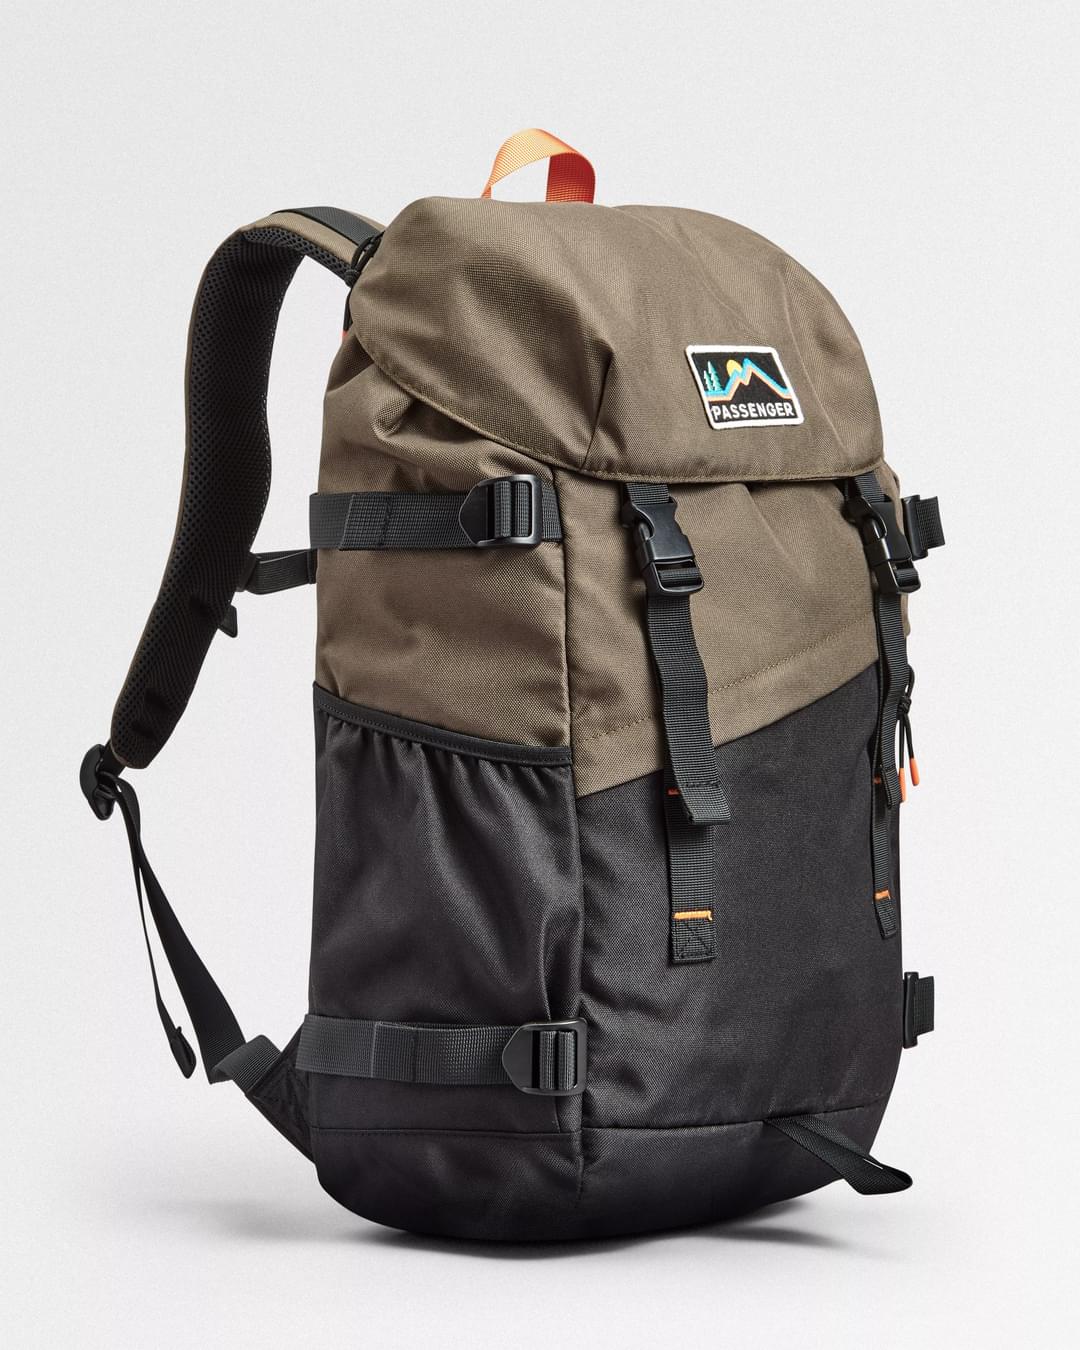 Boondocker Recycled 26L Backpack - Black/Khaki